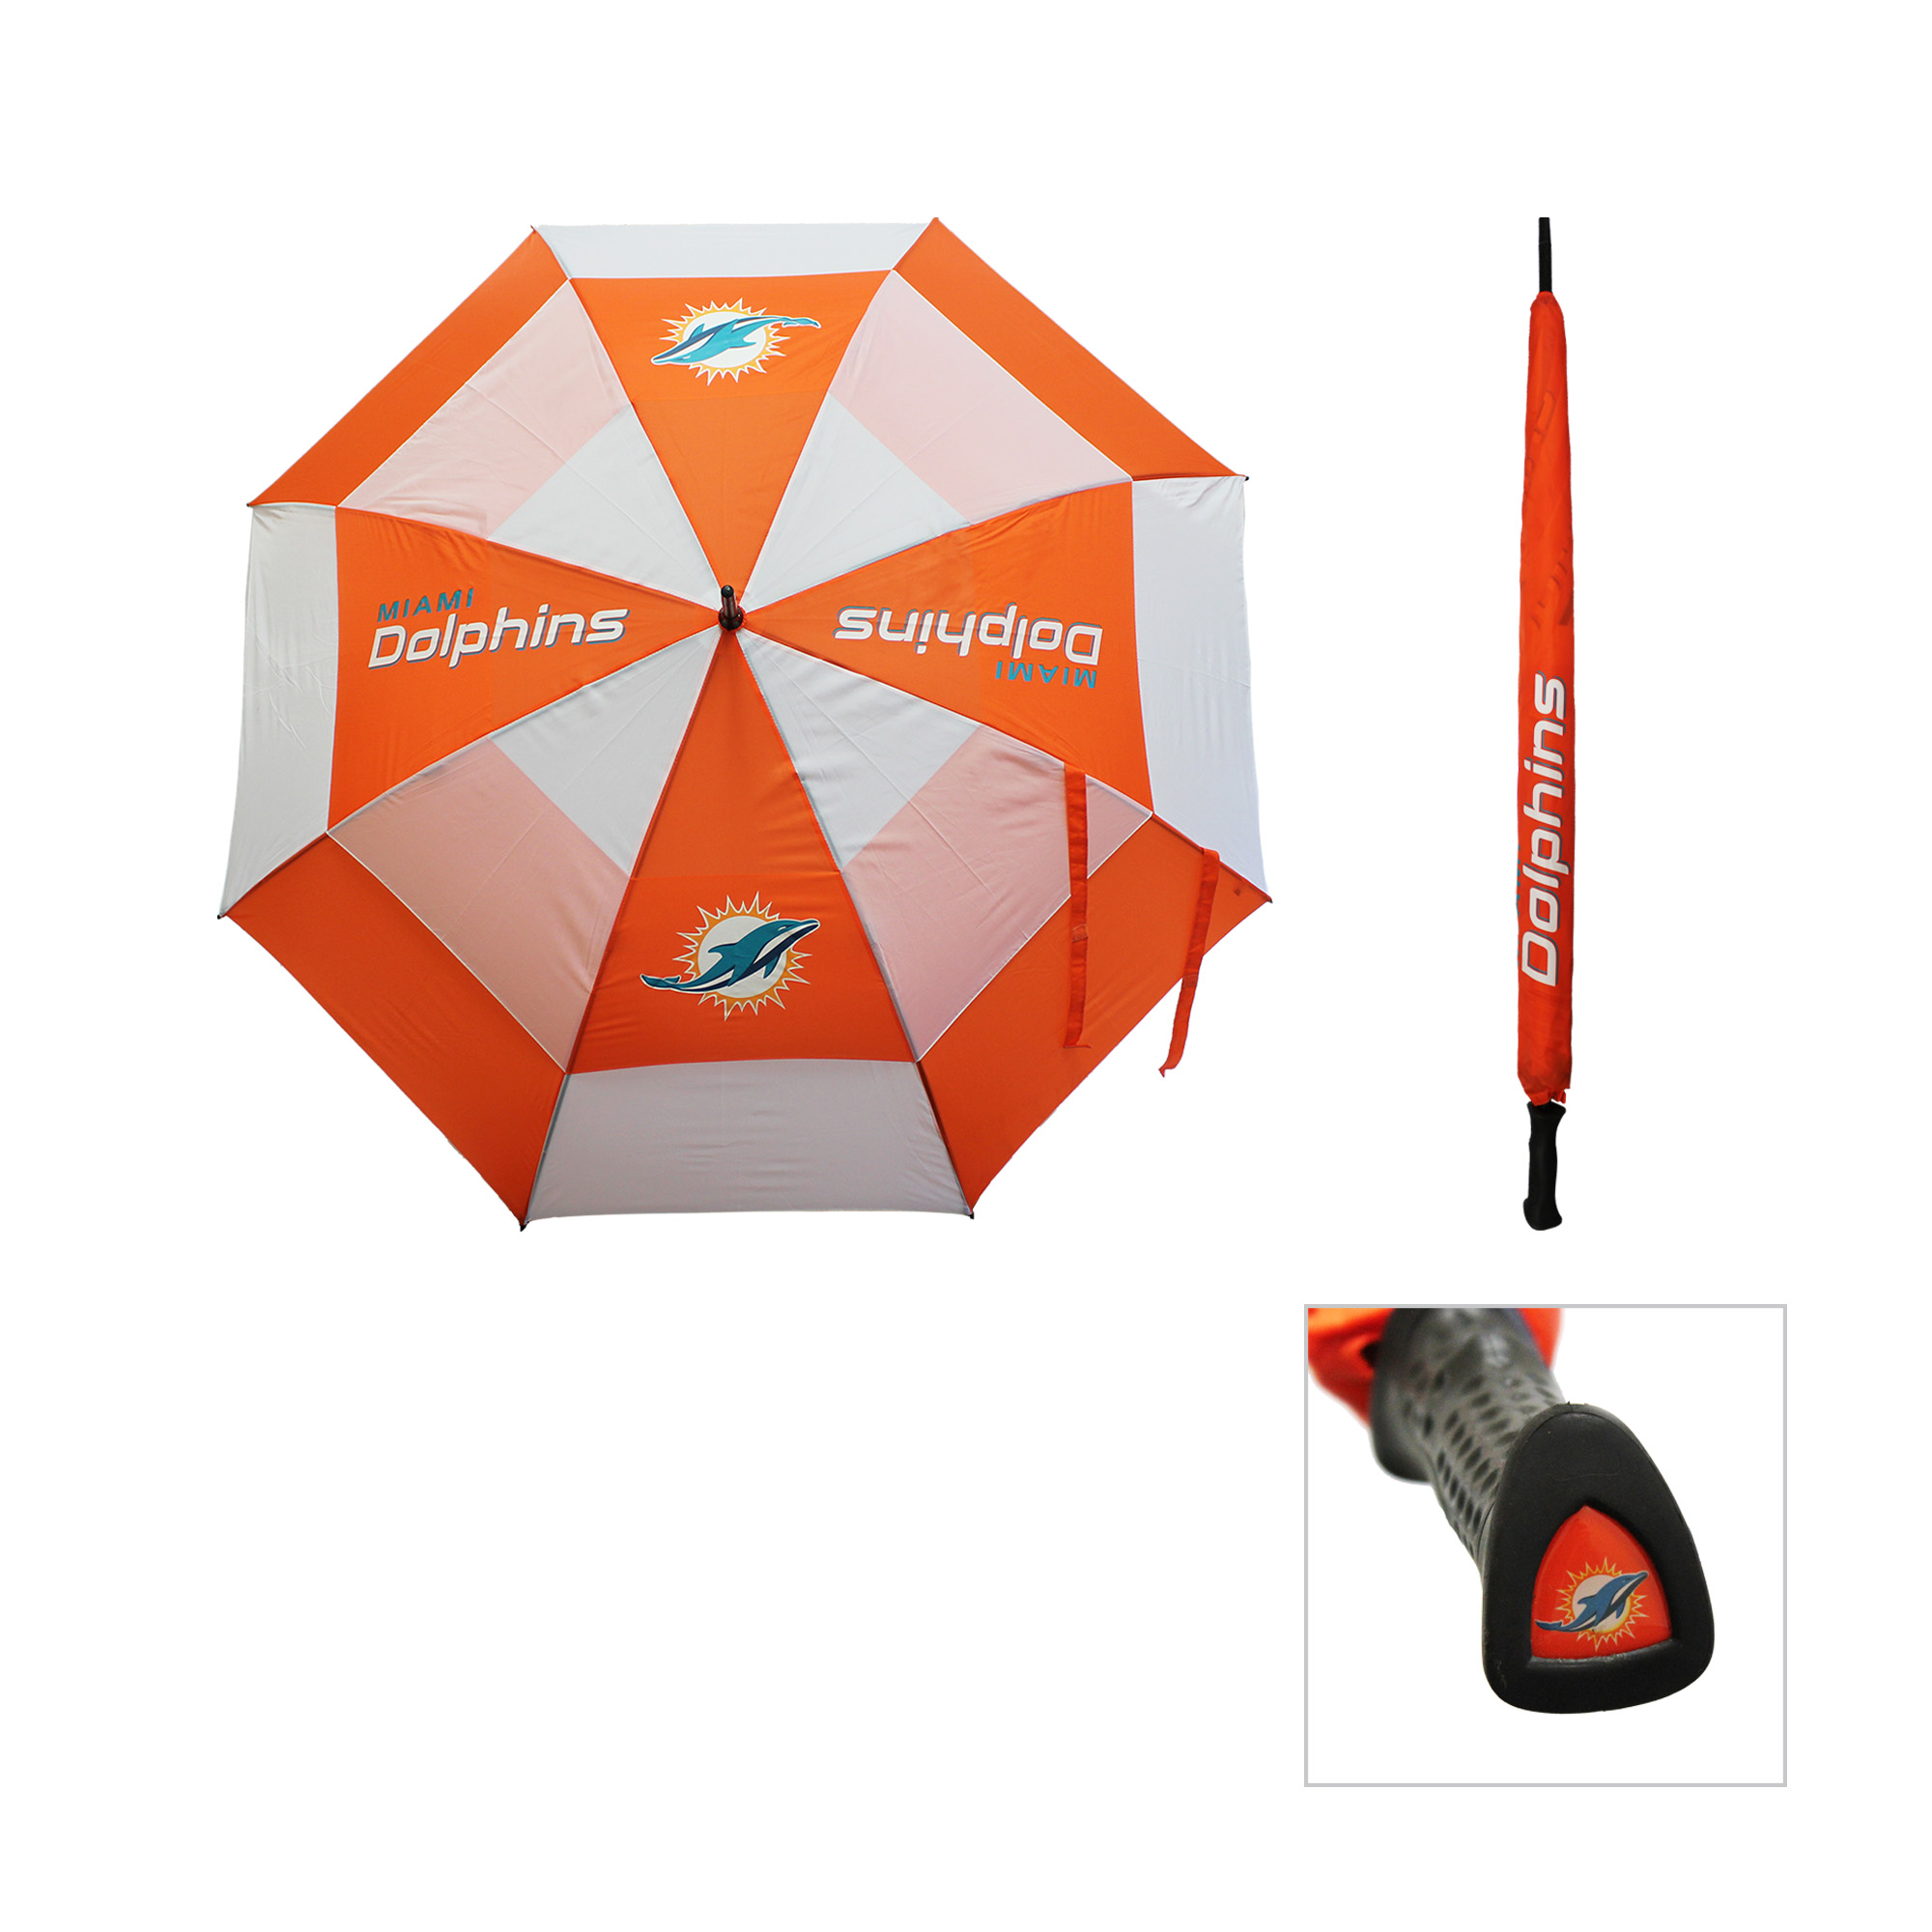 Miami Dolphins Umbrella